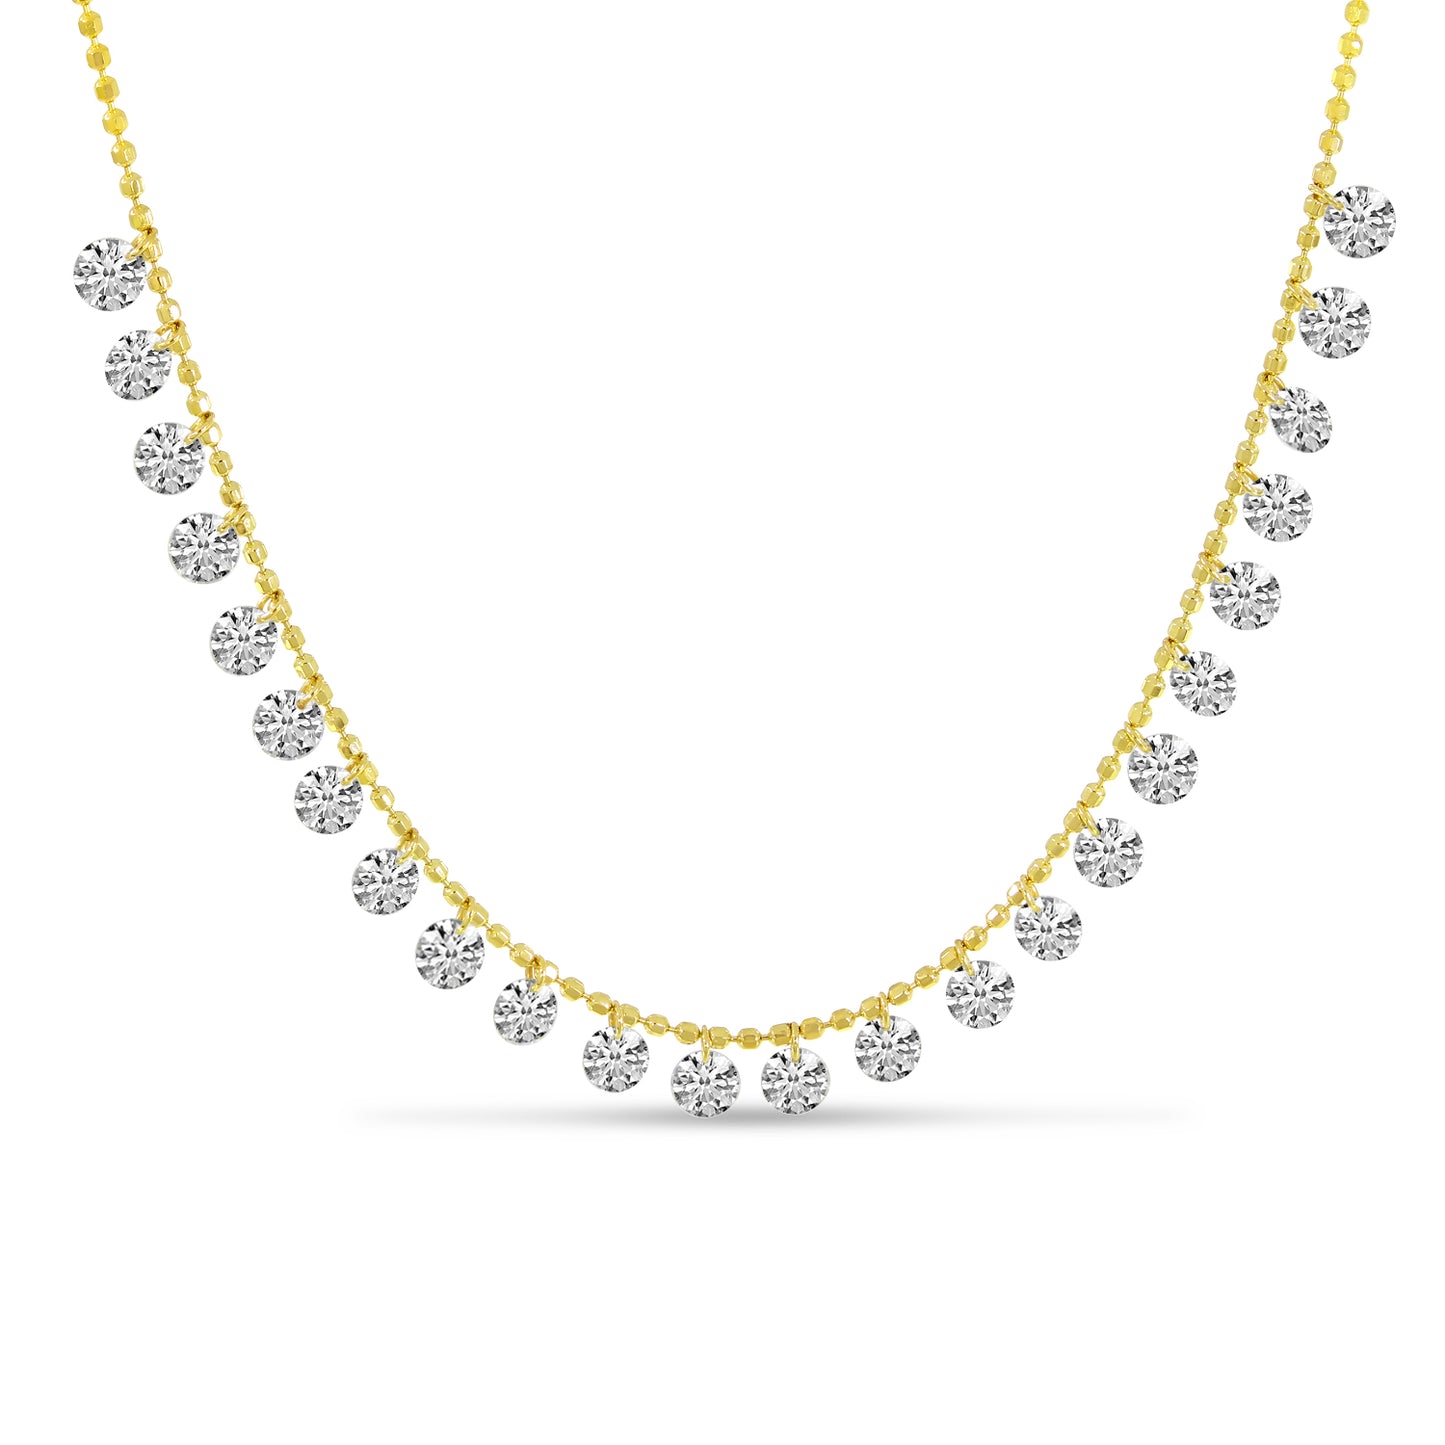 14K yellow gold floating diamond "shaker" necklace